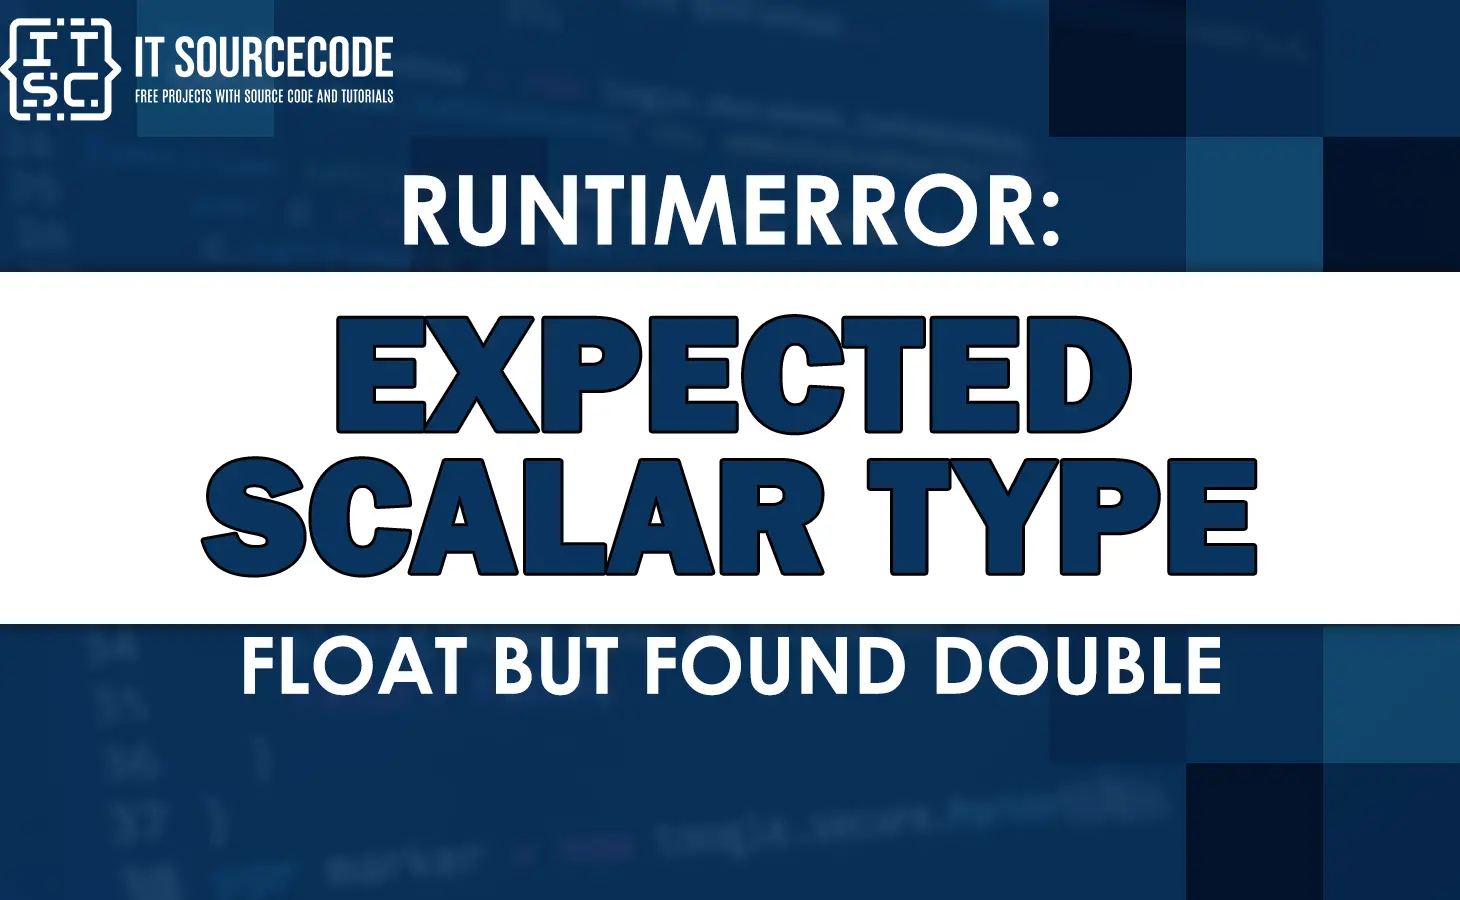 Runtimeerror expected scalar type float but found double